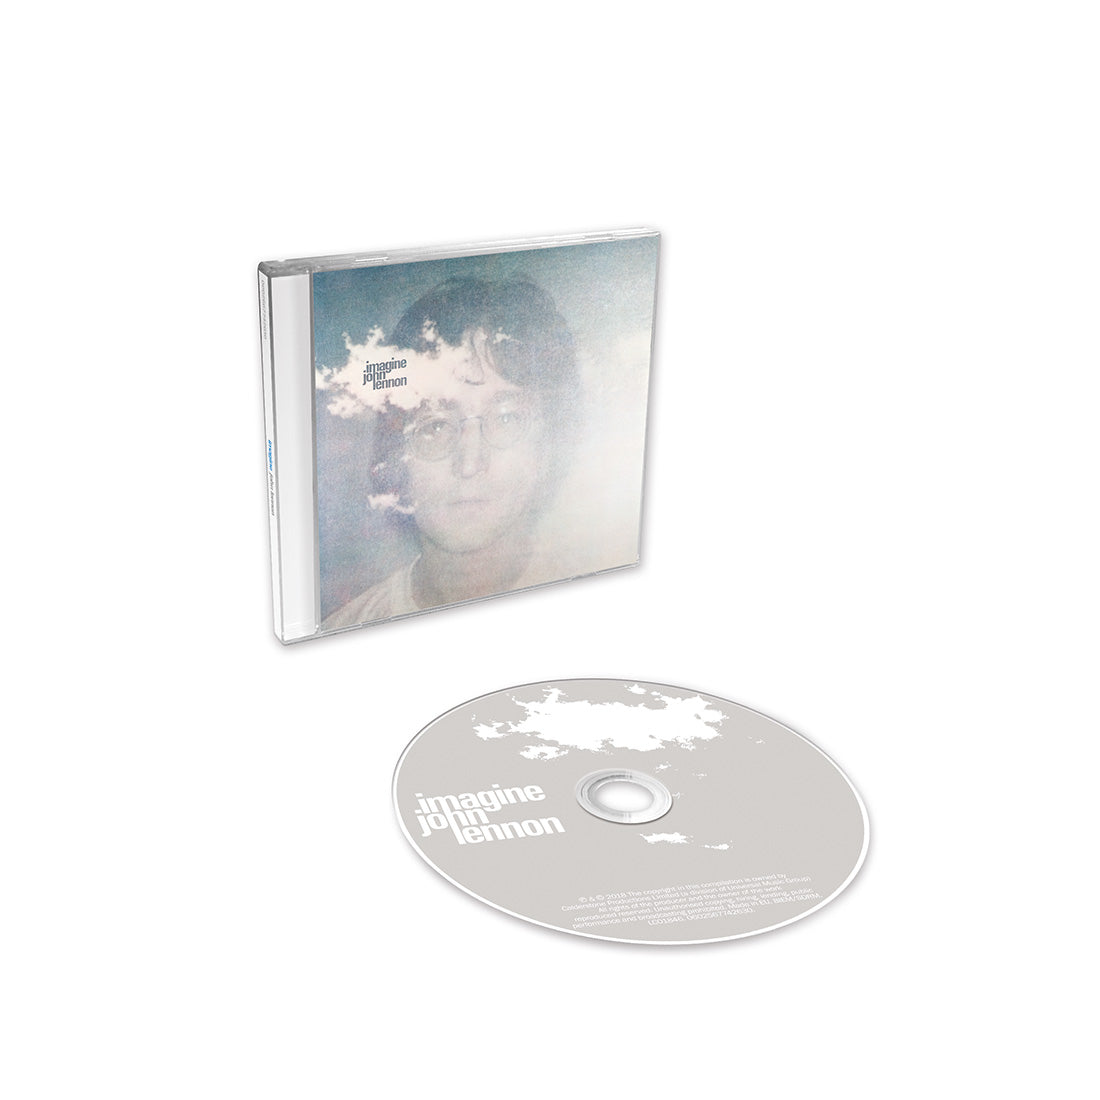 John Lennon, Yoko Ono - Imagine - The Ultimate Collection: CD